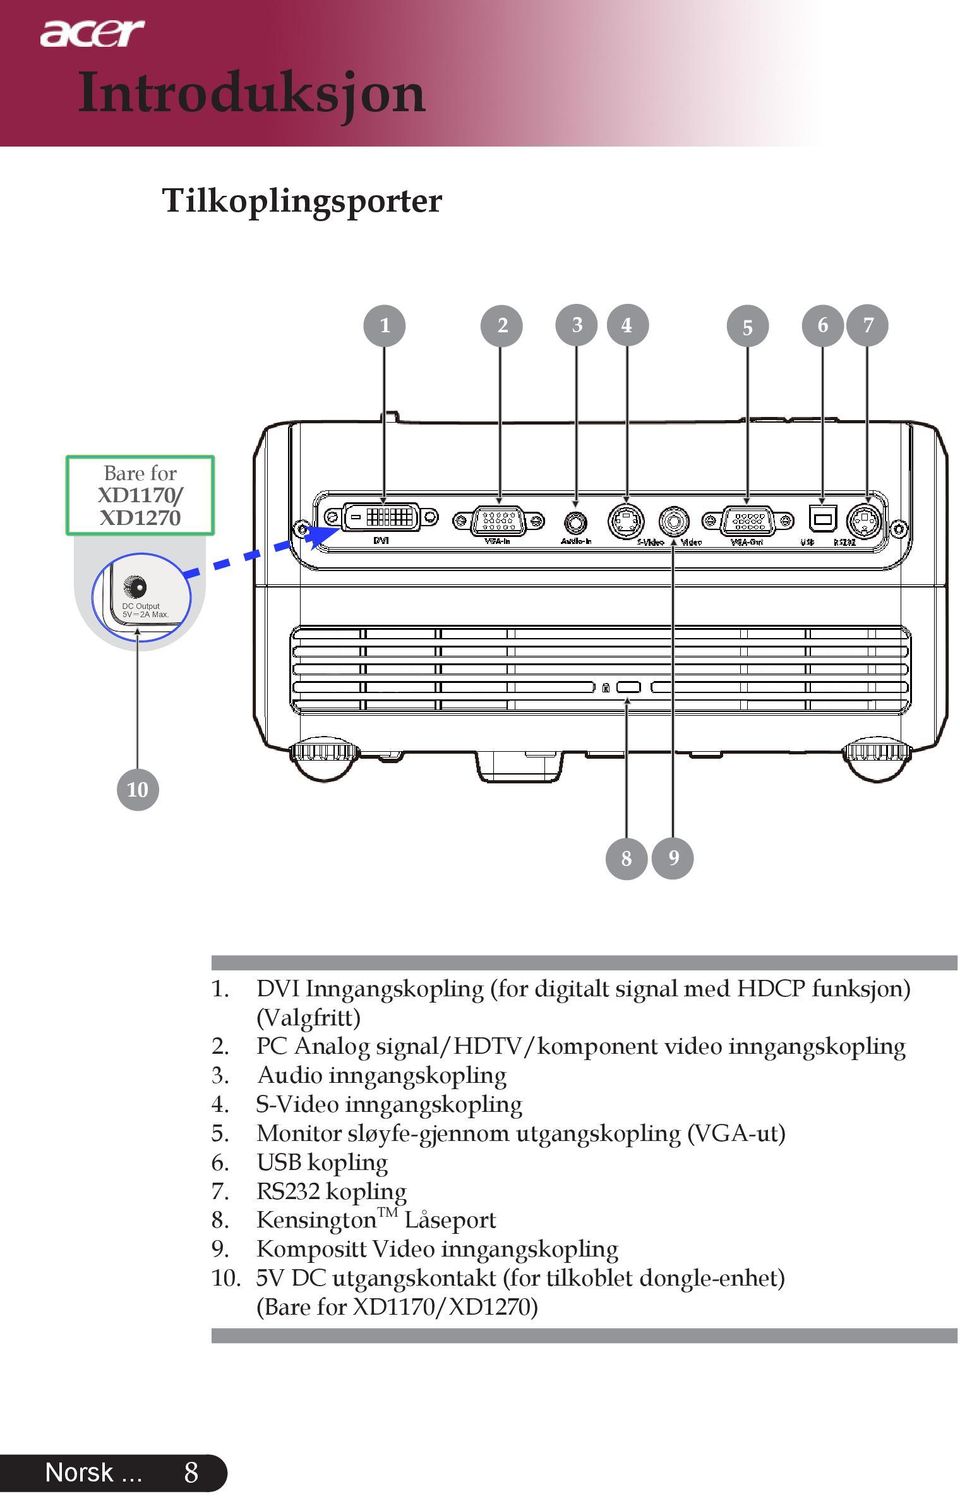 PC Analog signal/hdtv/komponent video inngangskopling 3. Audio inngangskopling 4. S-Video inngangskopling 5.